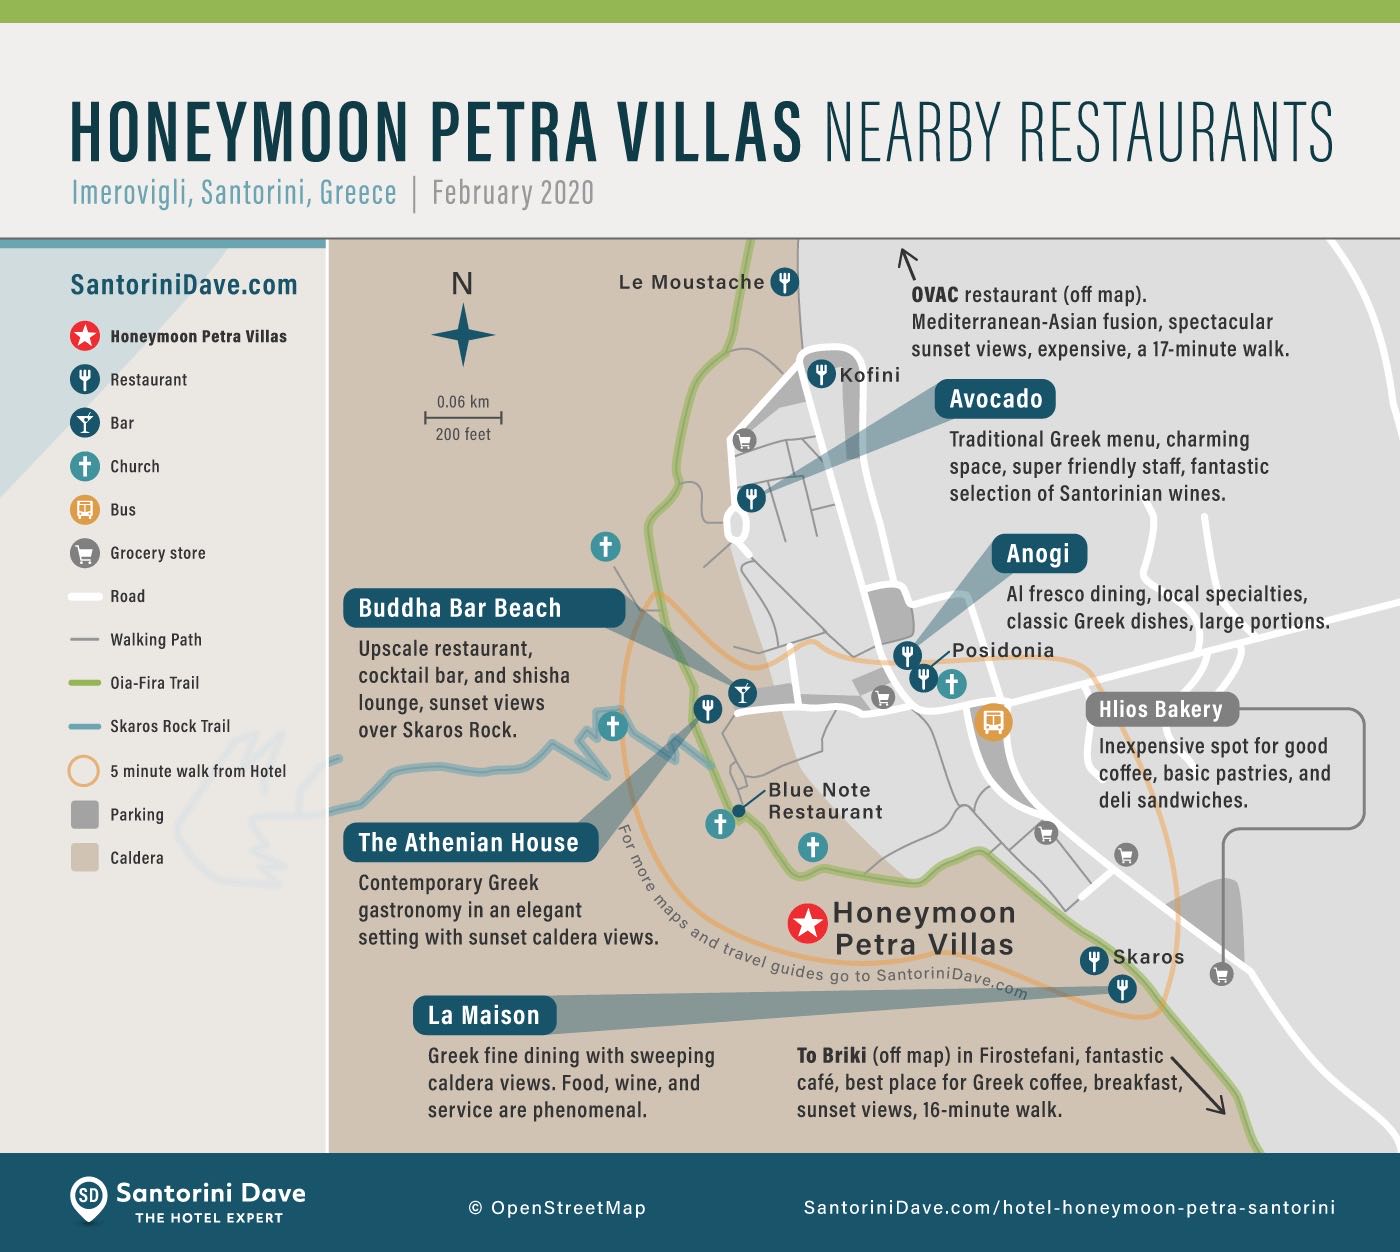 Map showing restaurants near Honeymoon Petra Villas